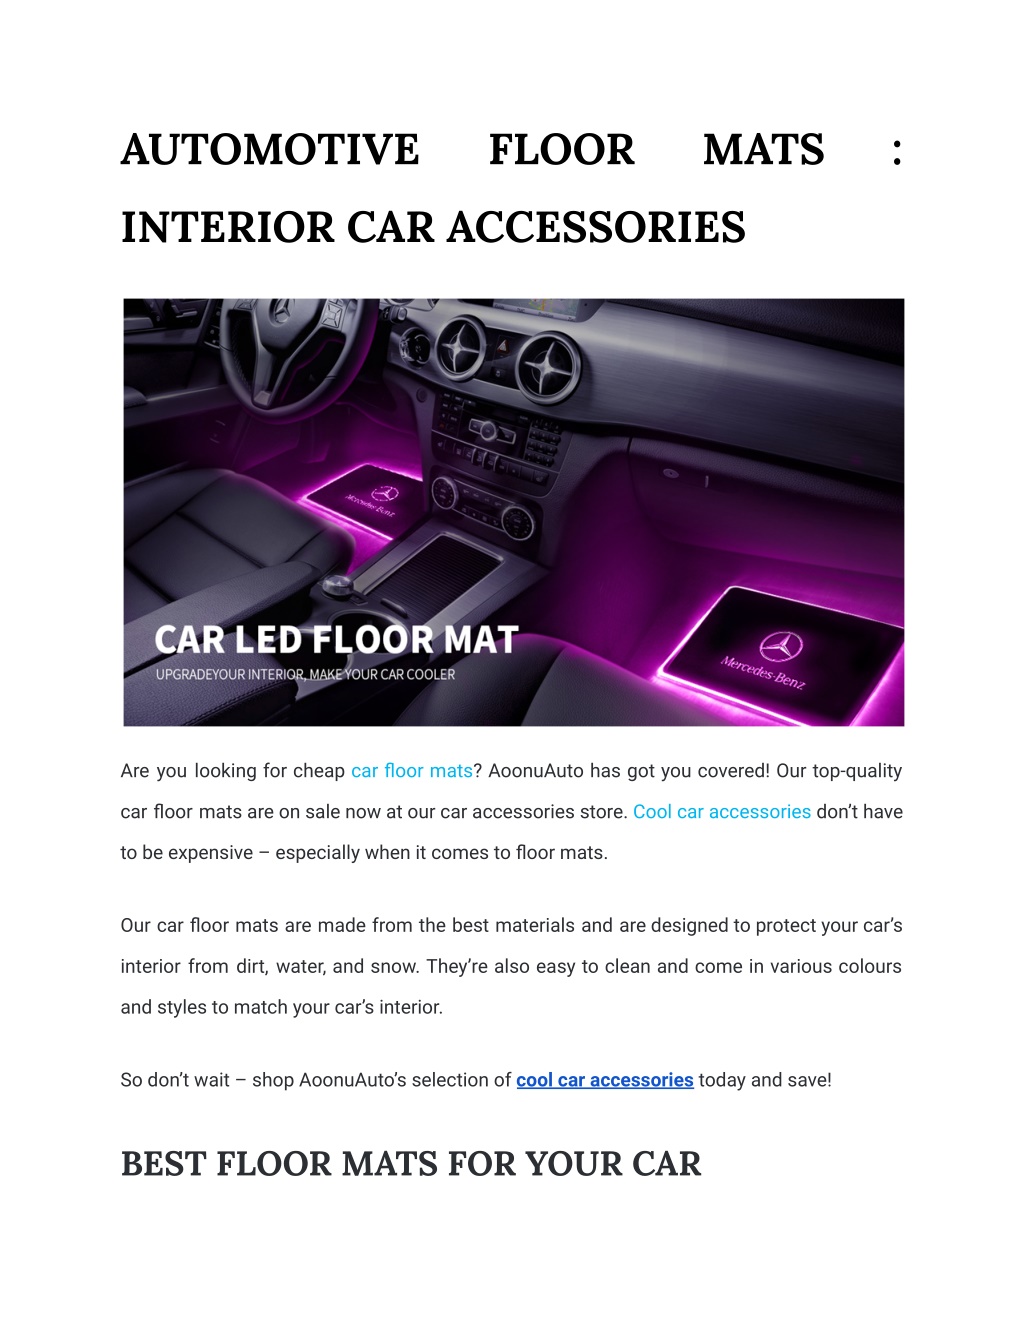 Best Interior Car Accessories